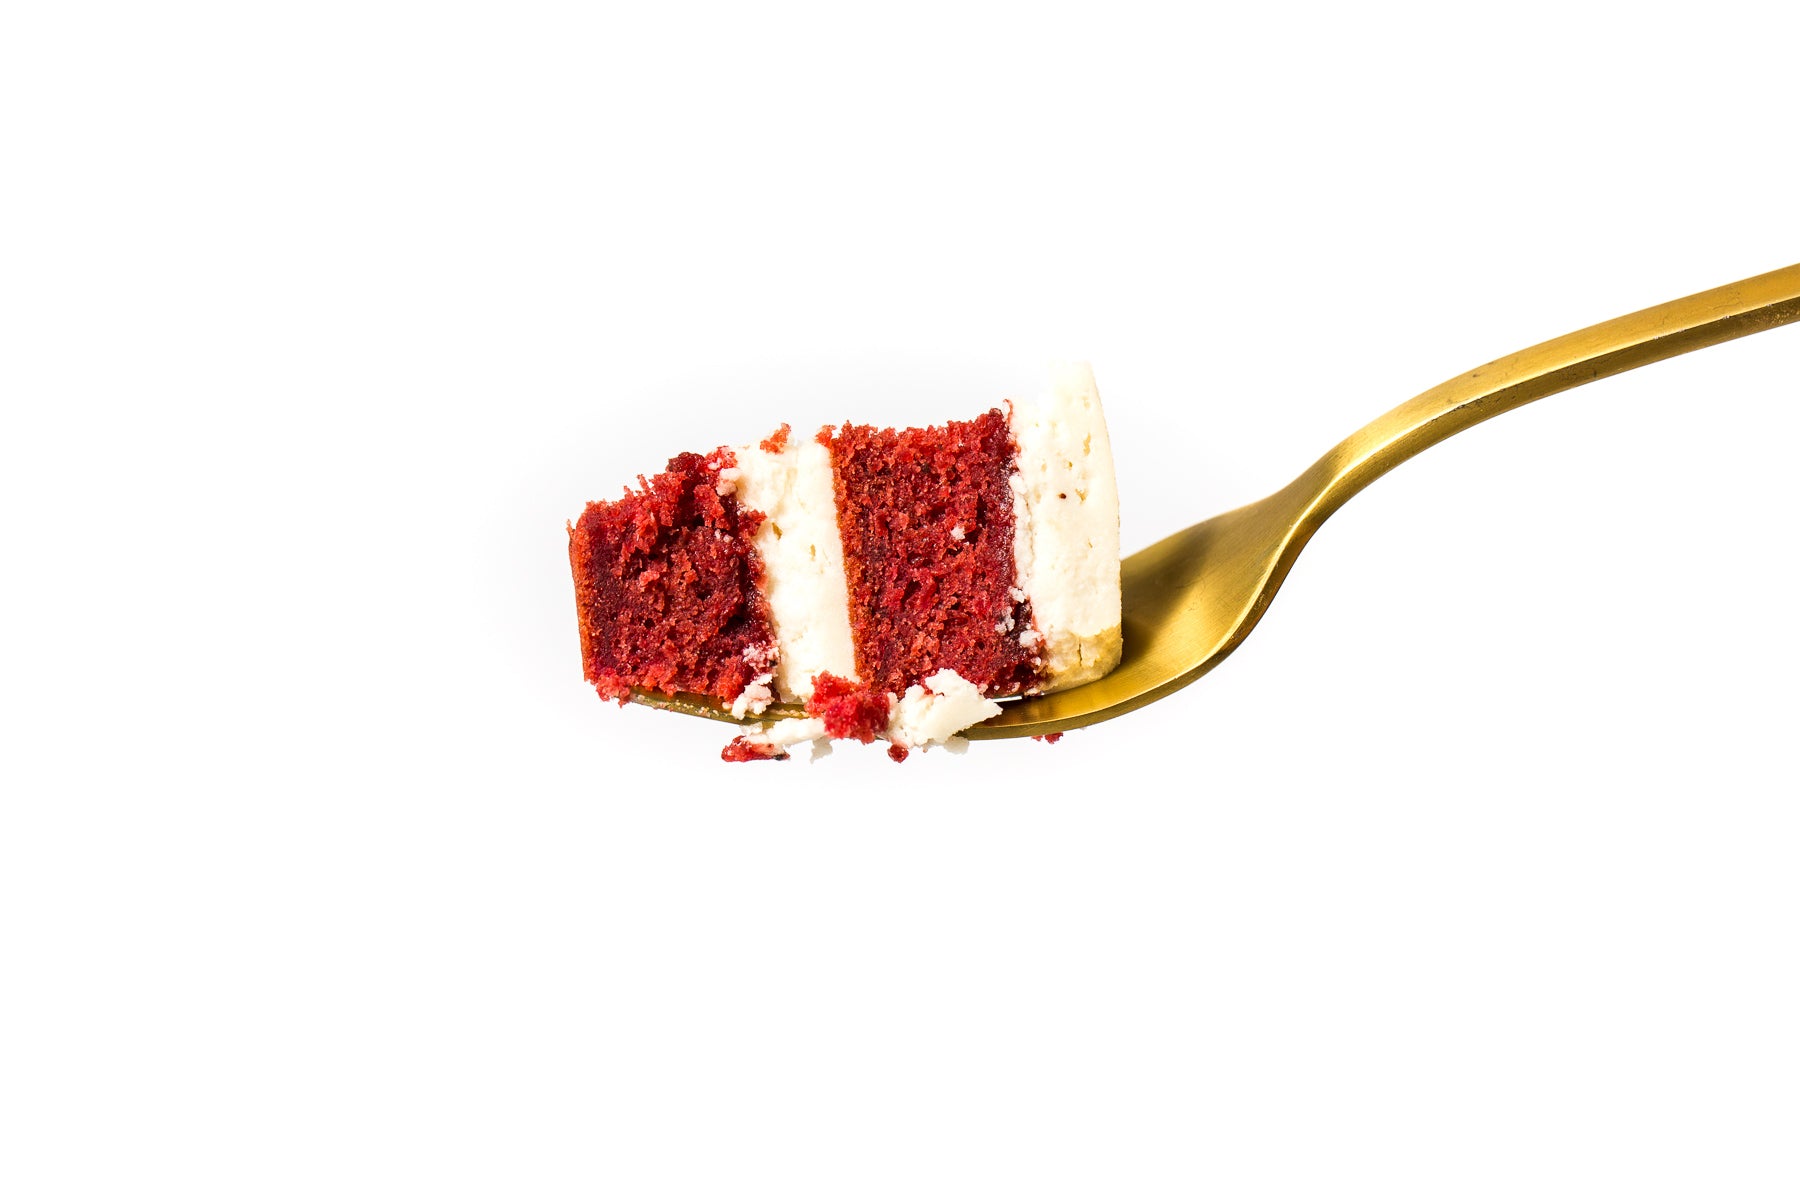 Image of a fork holding a bite of Miss Jones Baking Co Beet Red Velvet Layer Cake